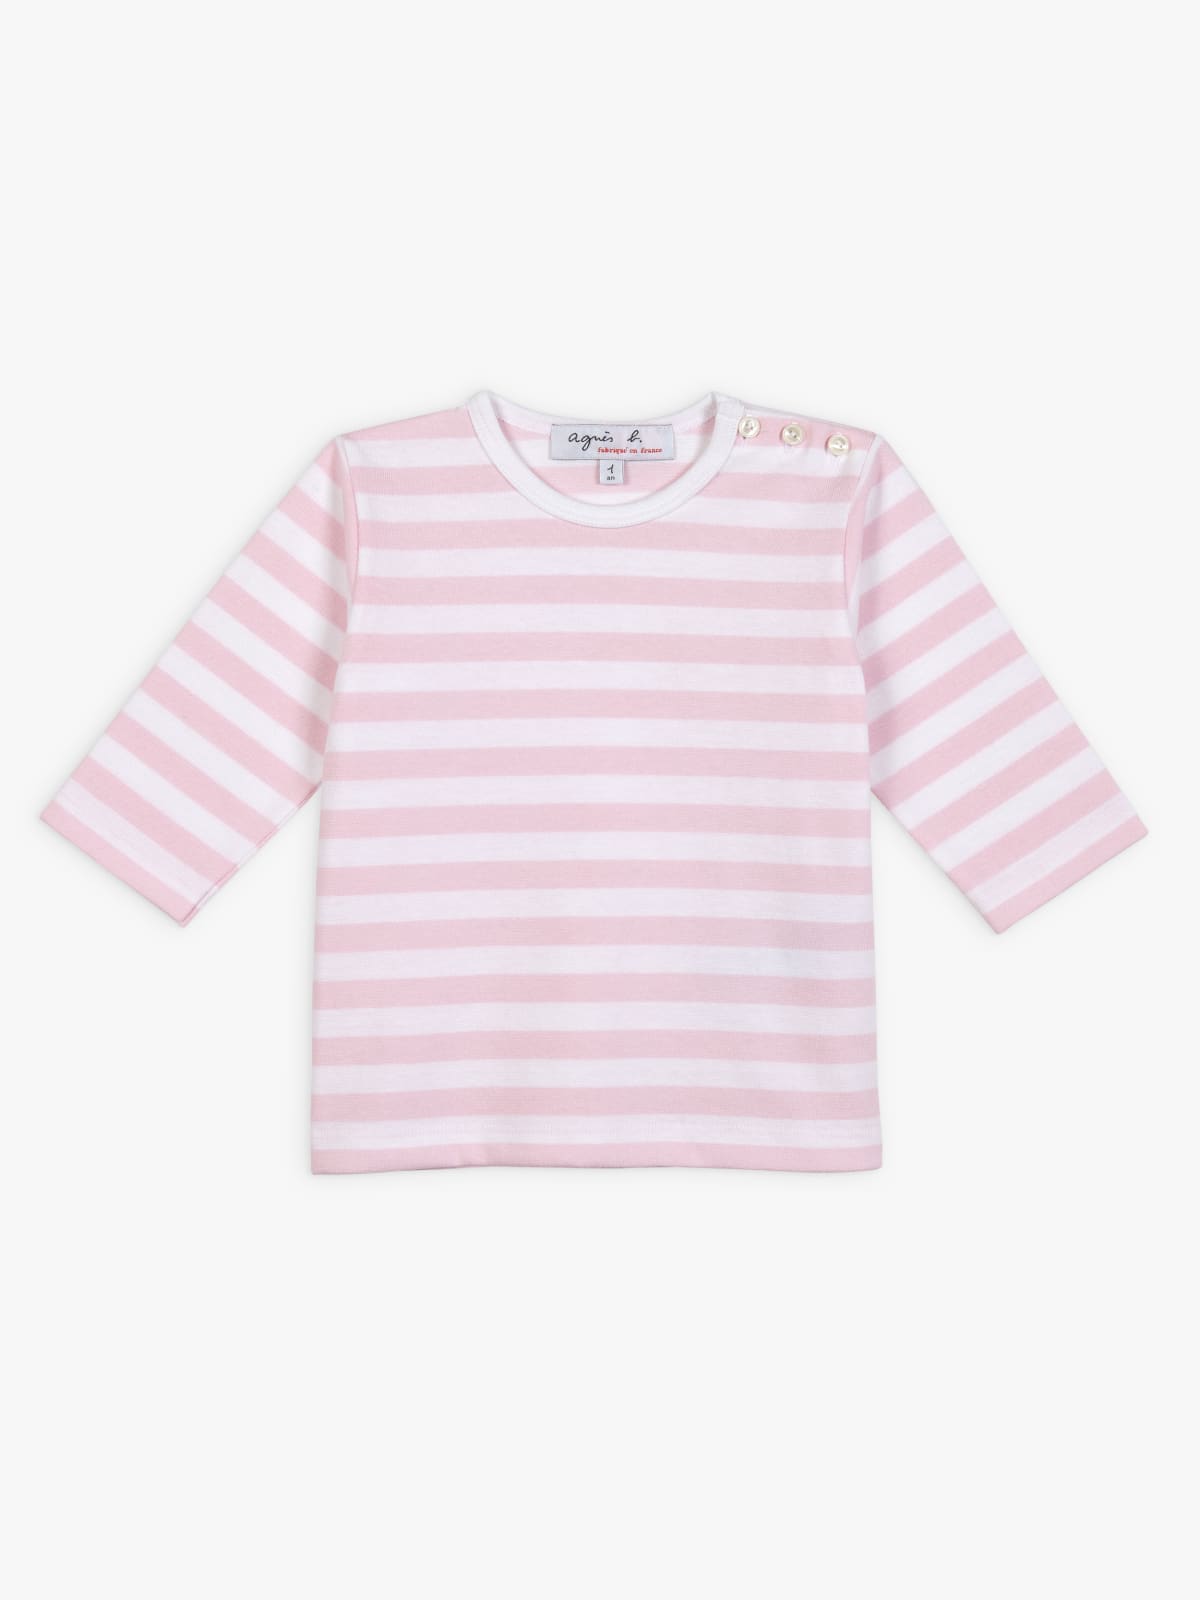 white/pink striped undershirt